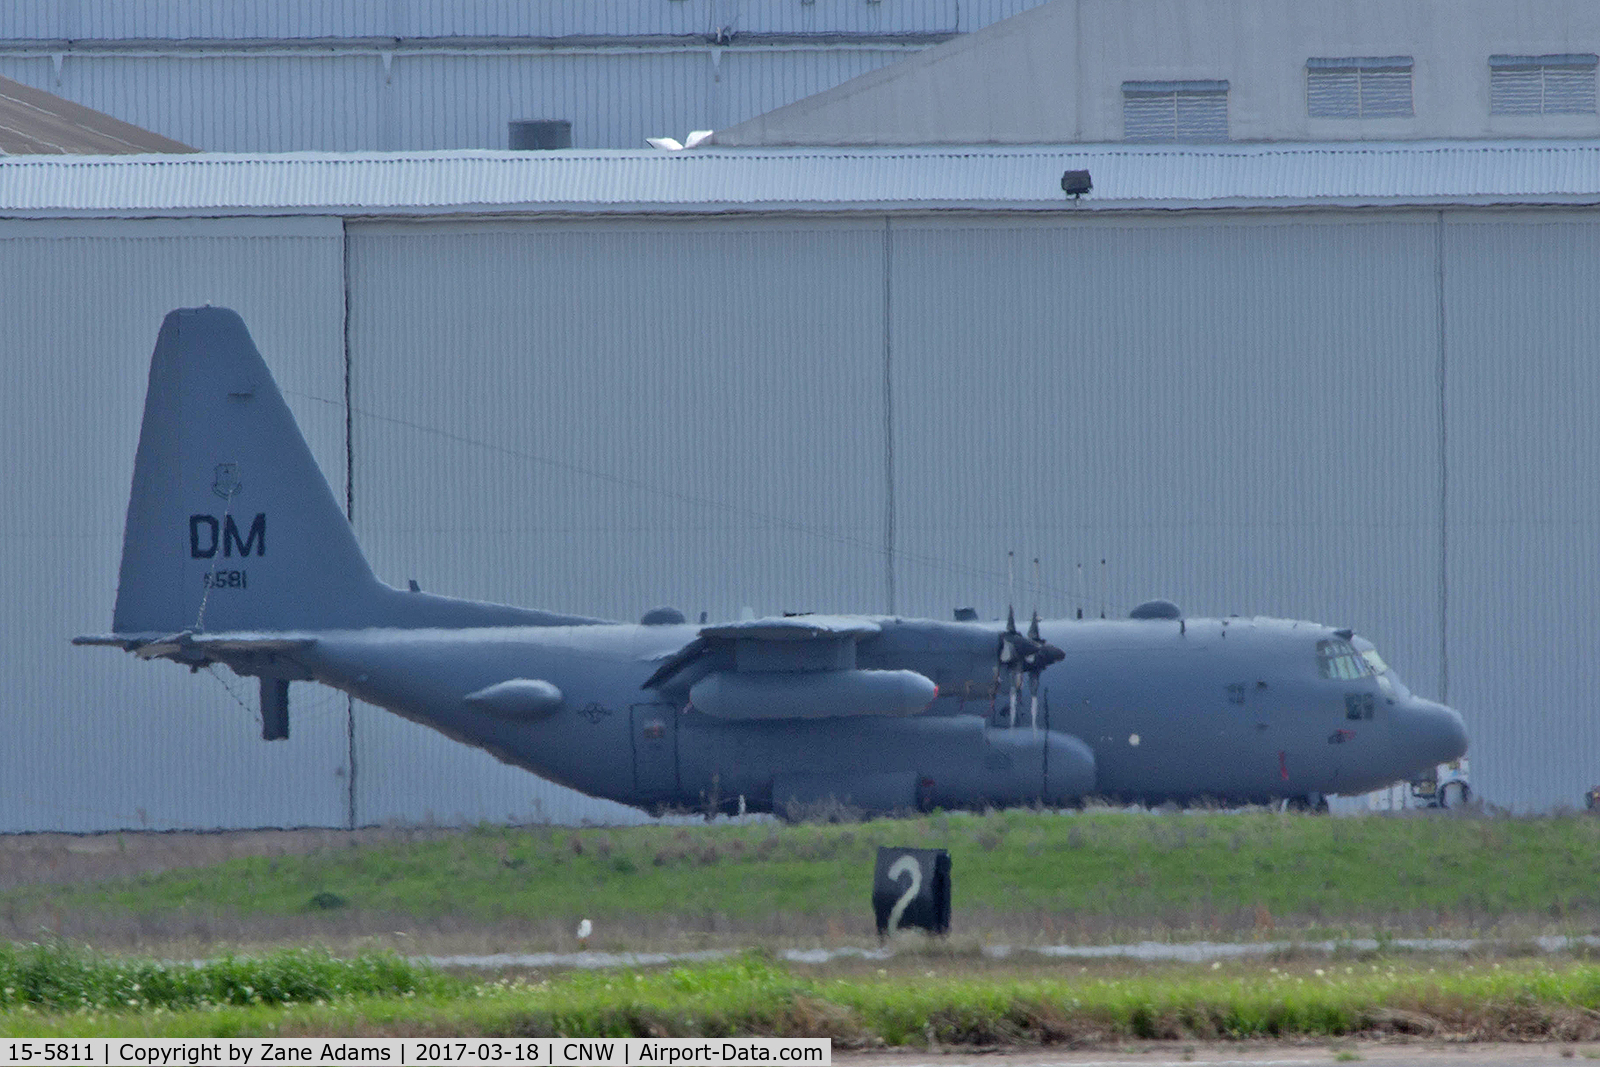 15-5811, 2015 Lockheed MC-130J C/N 5811, At Waco - TSTC airport